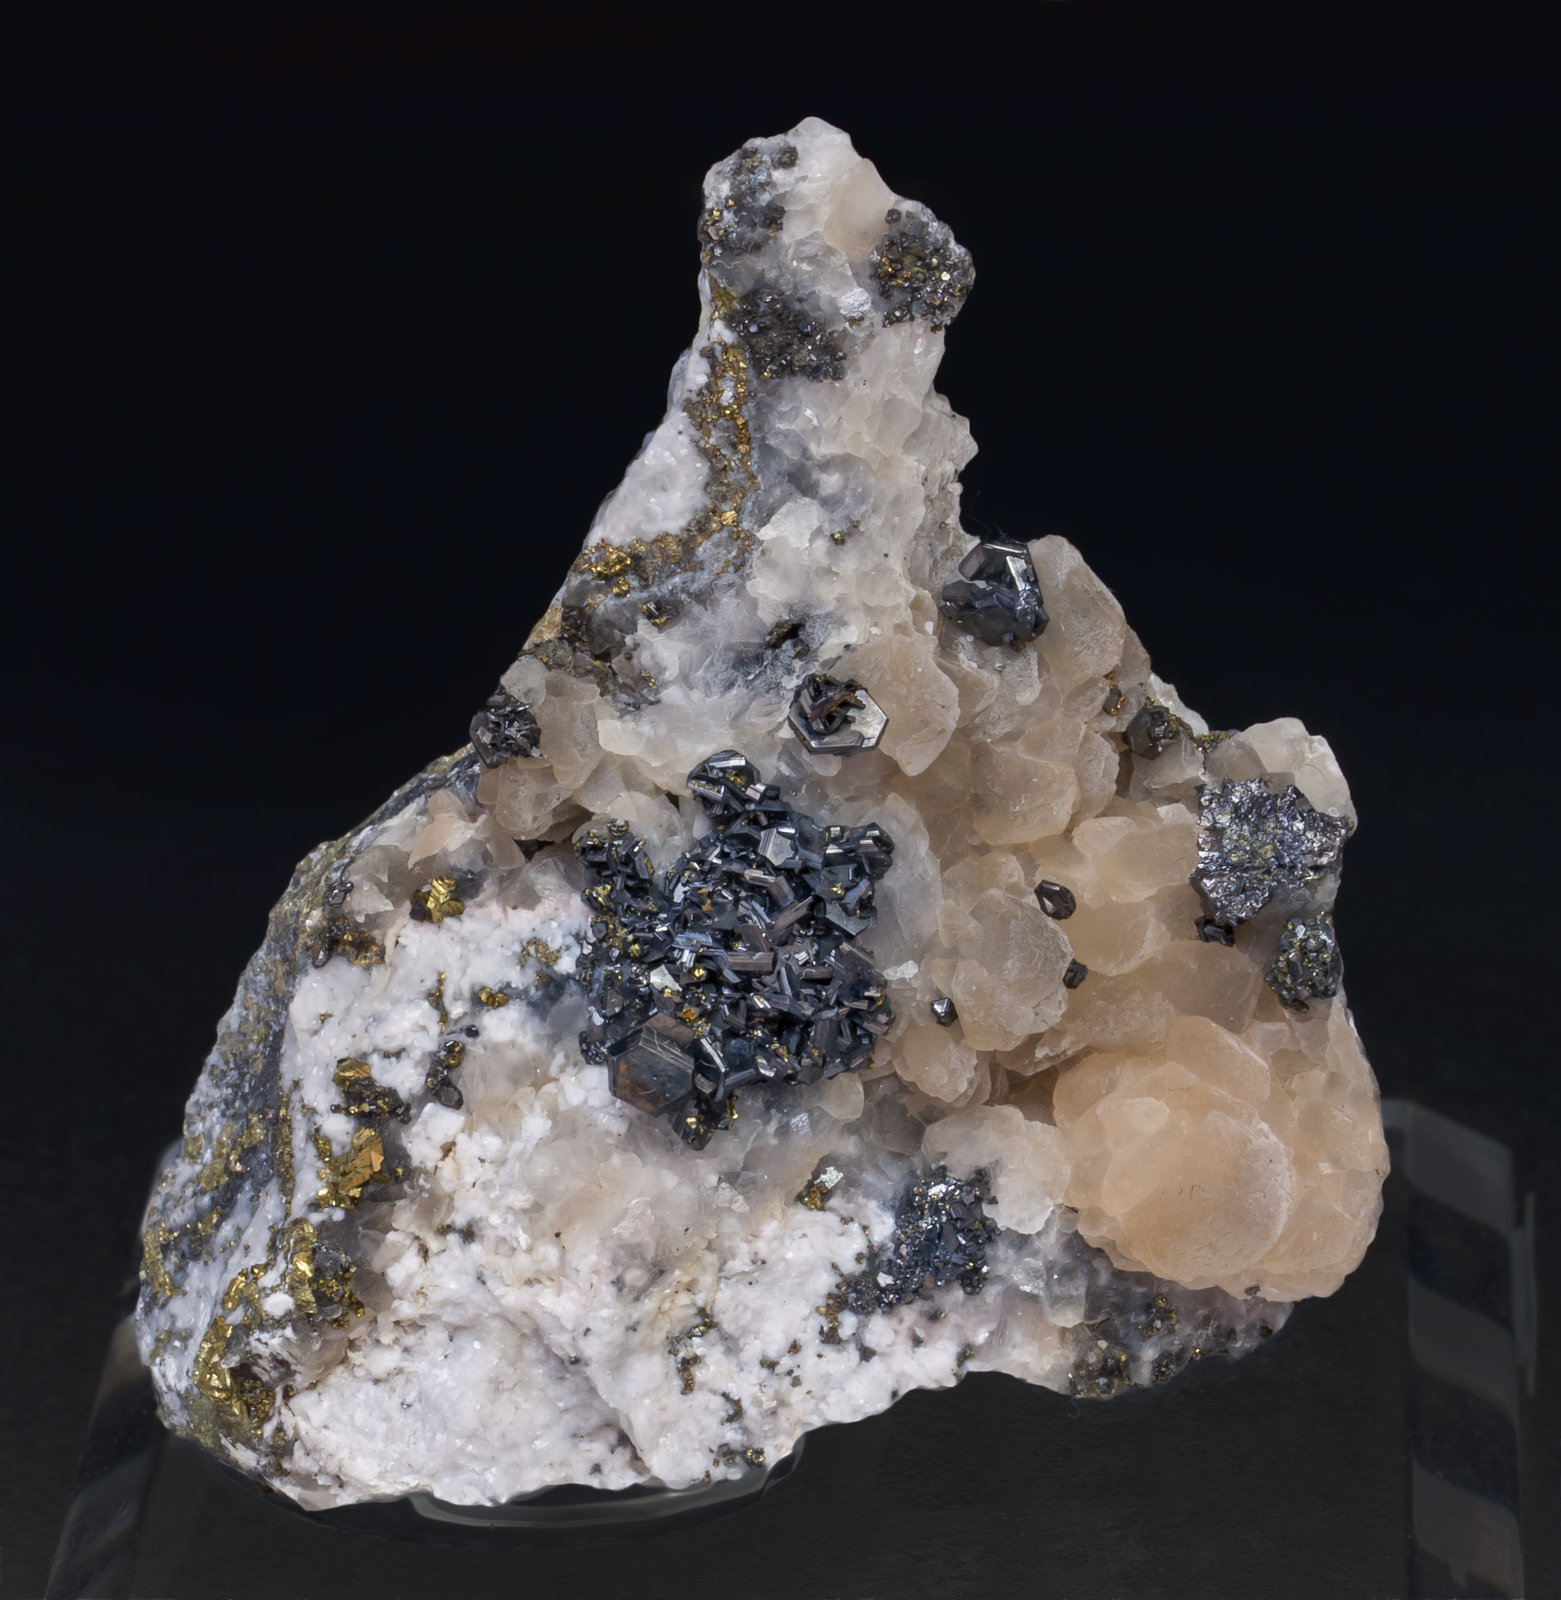 specimens/s_imagesAJ3/Pearceite-TM98AJ3f.jpg